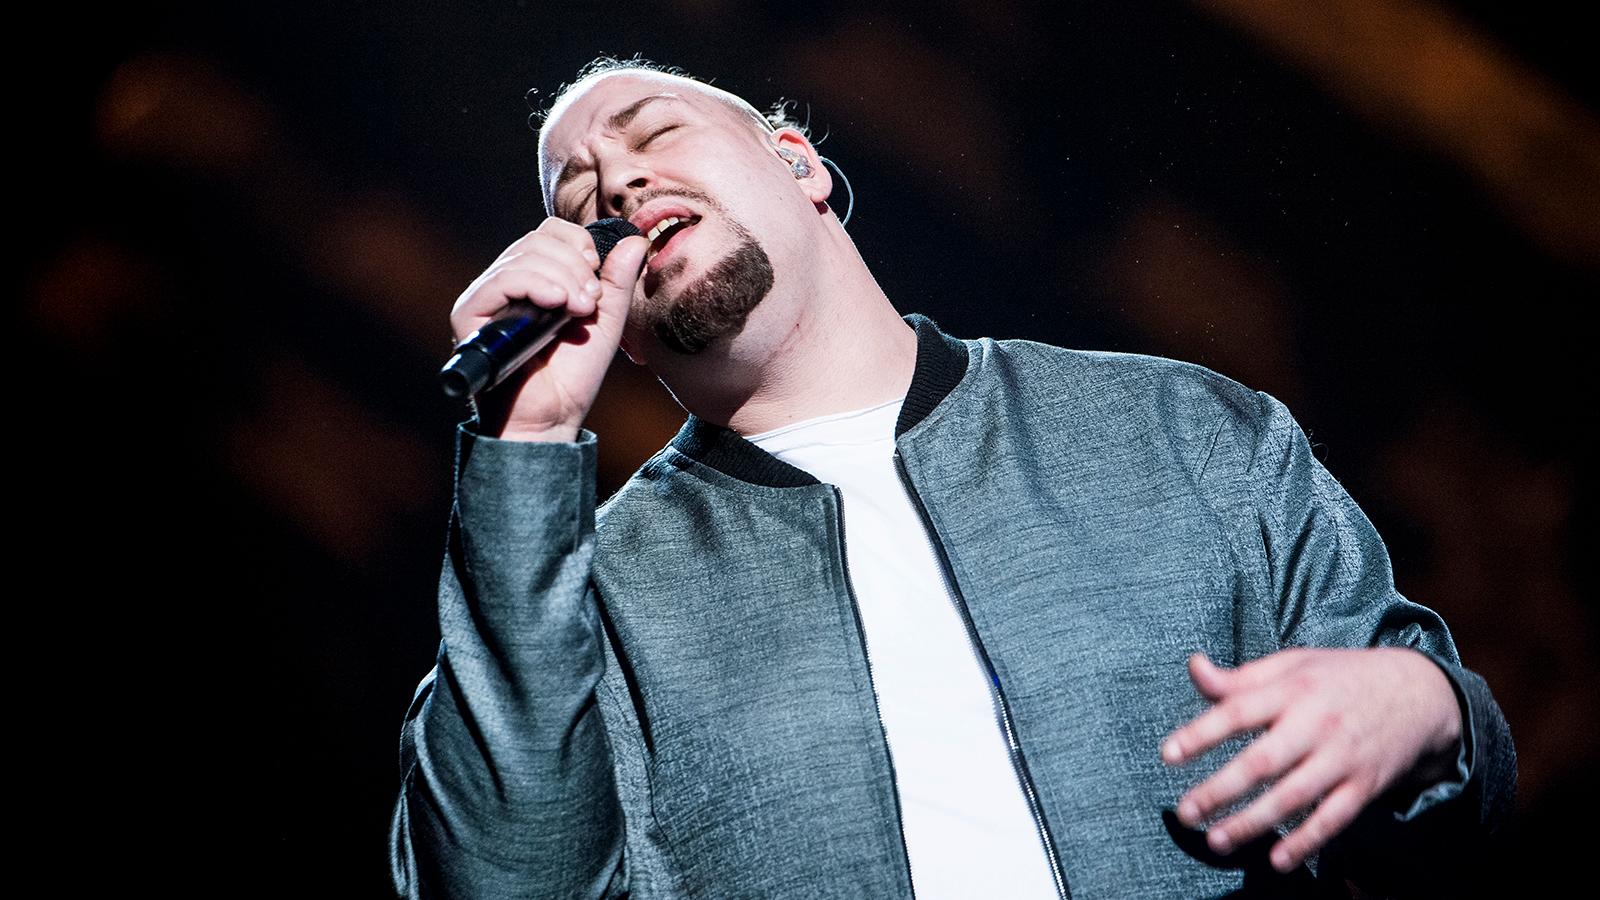 Nano gjorde succé med ”Hold on” i Melodifestivalen 2017.